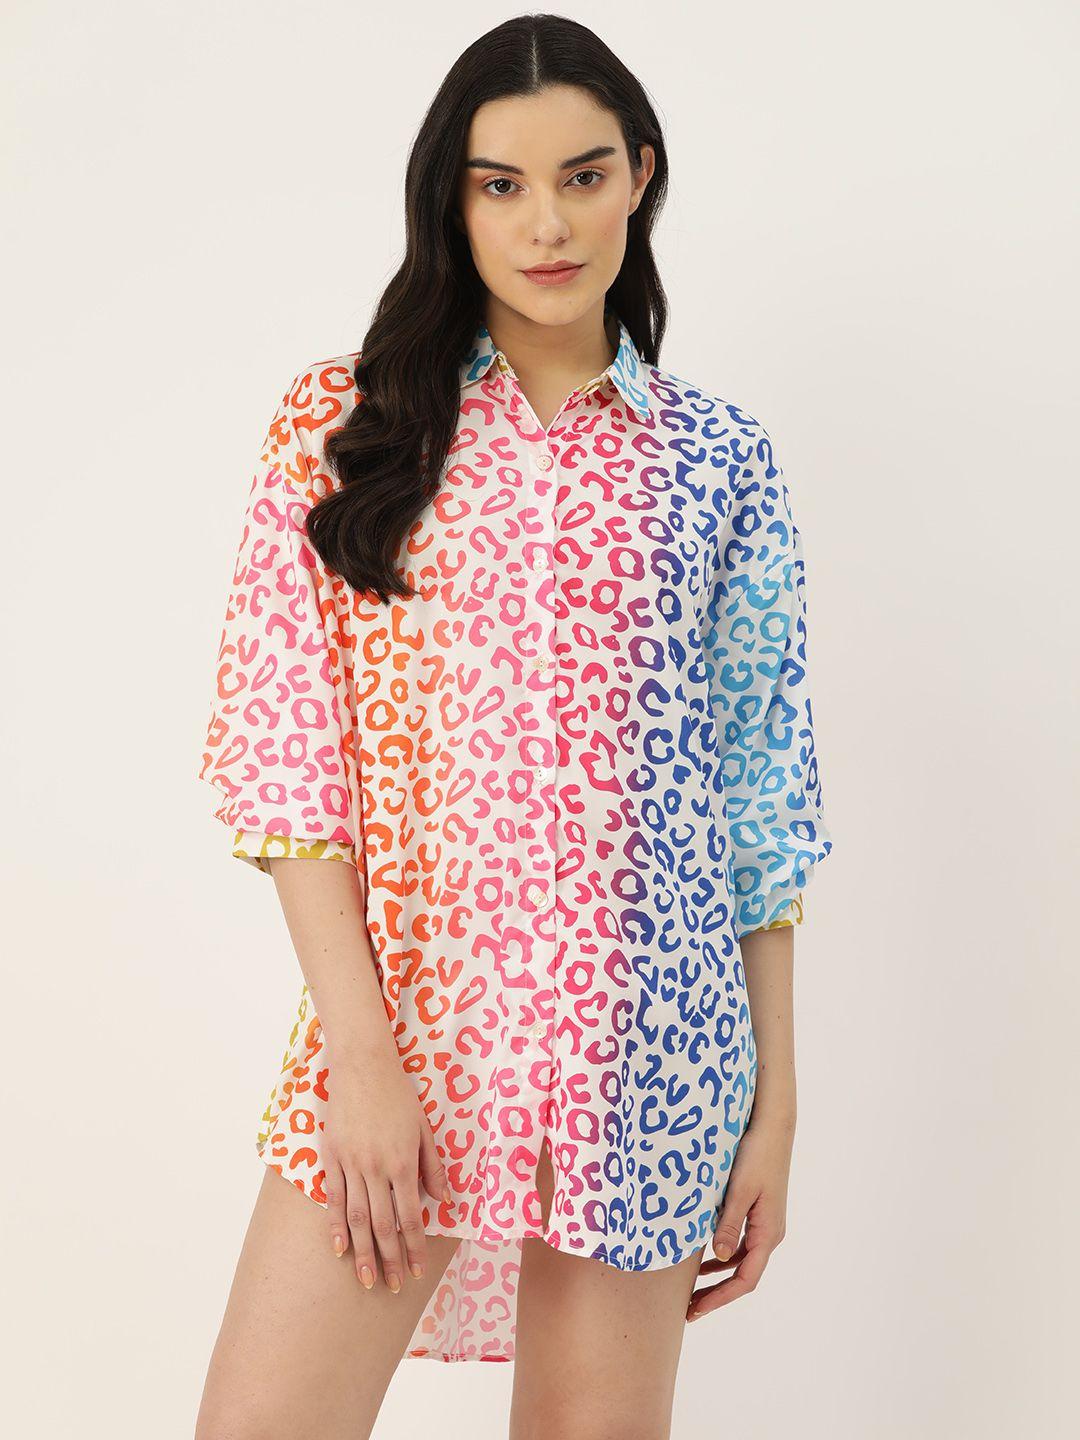 ms.lingies animal printed shirt nightdress